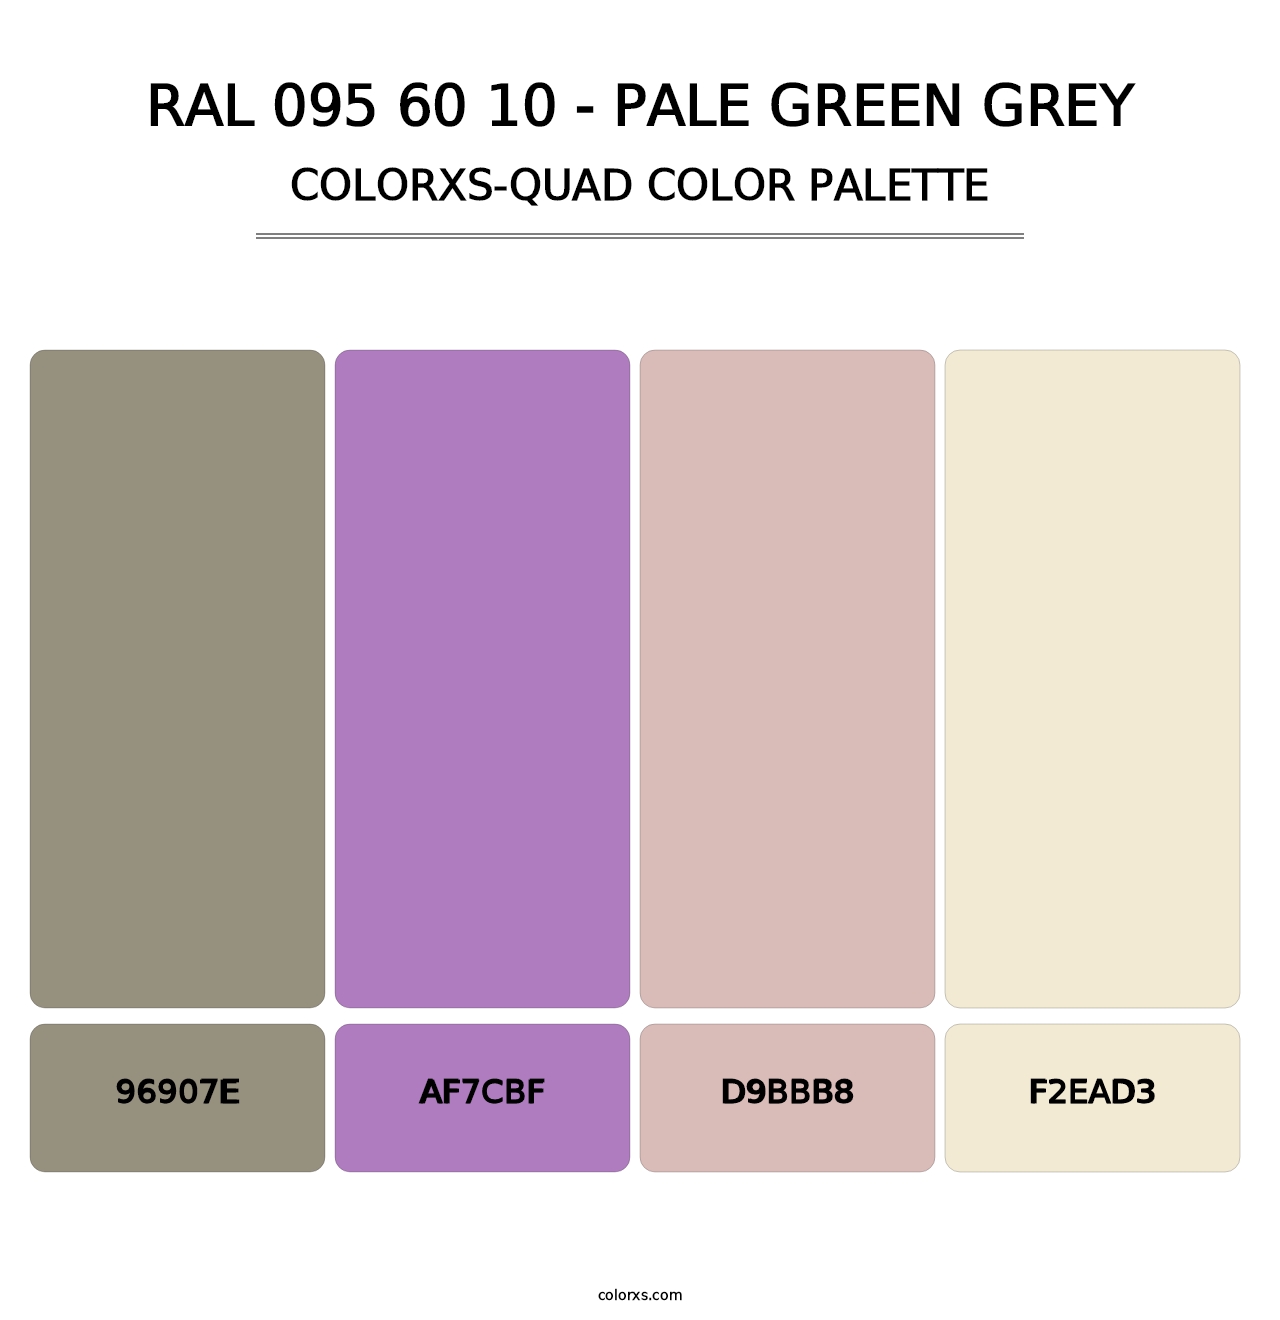 RAL 095 60 10 - Pale Green Grey - Colorxs Quad Palette